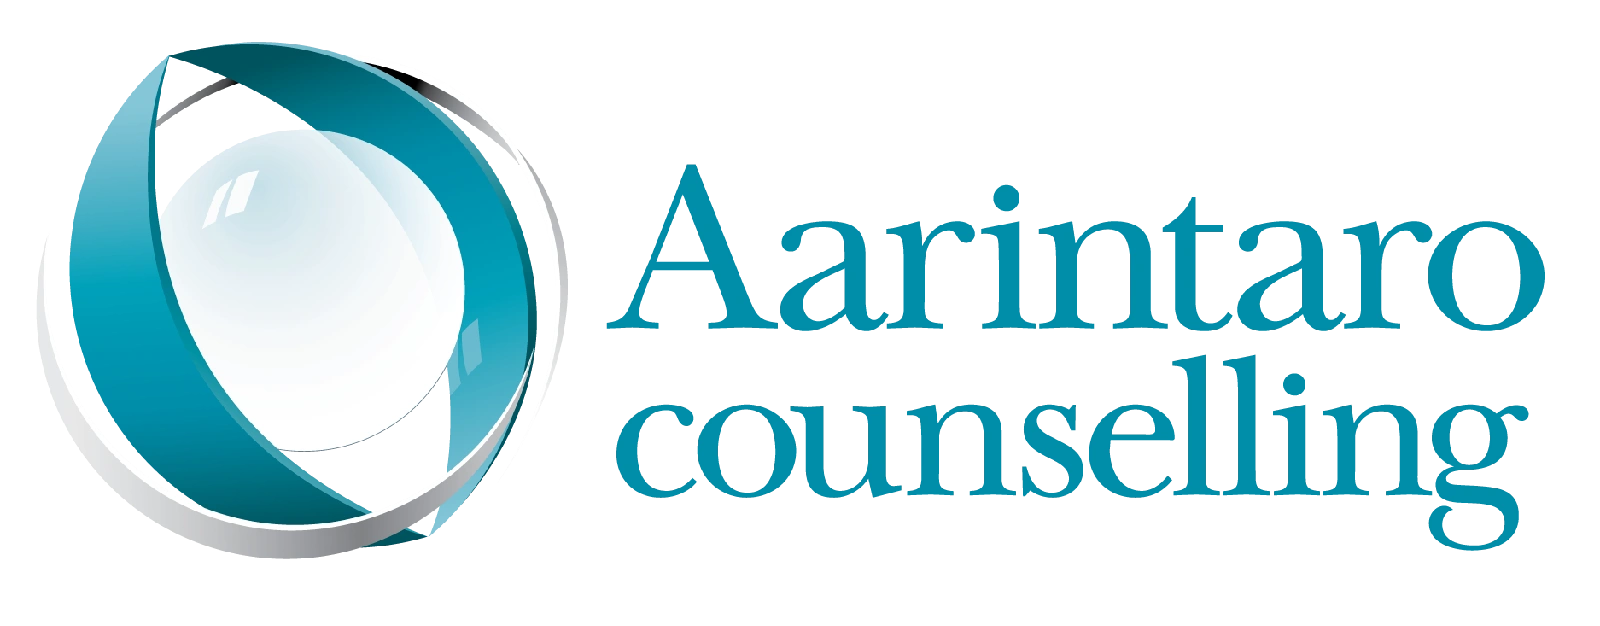 Aarintaro Counselling logo depicts balance.